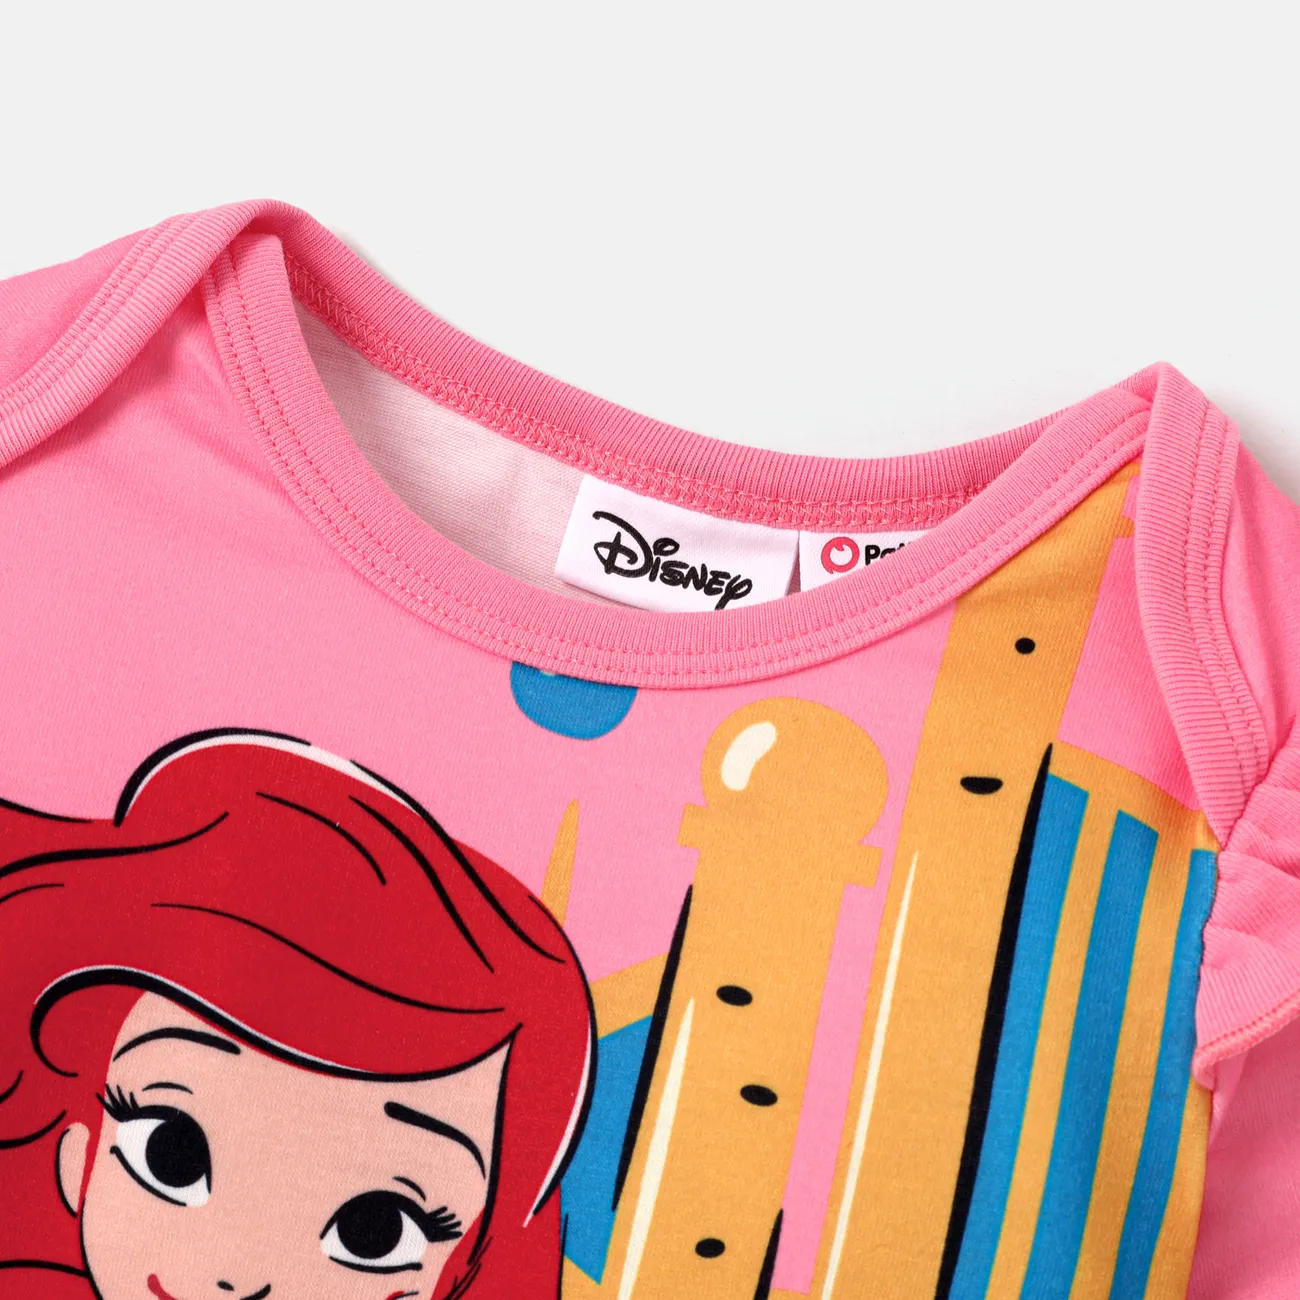 Disney Princess 嬰兒 女 甜美 長袖 連身衣 暗粉色 big image 1